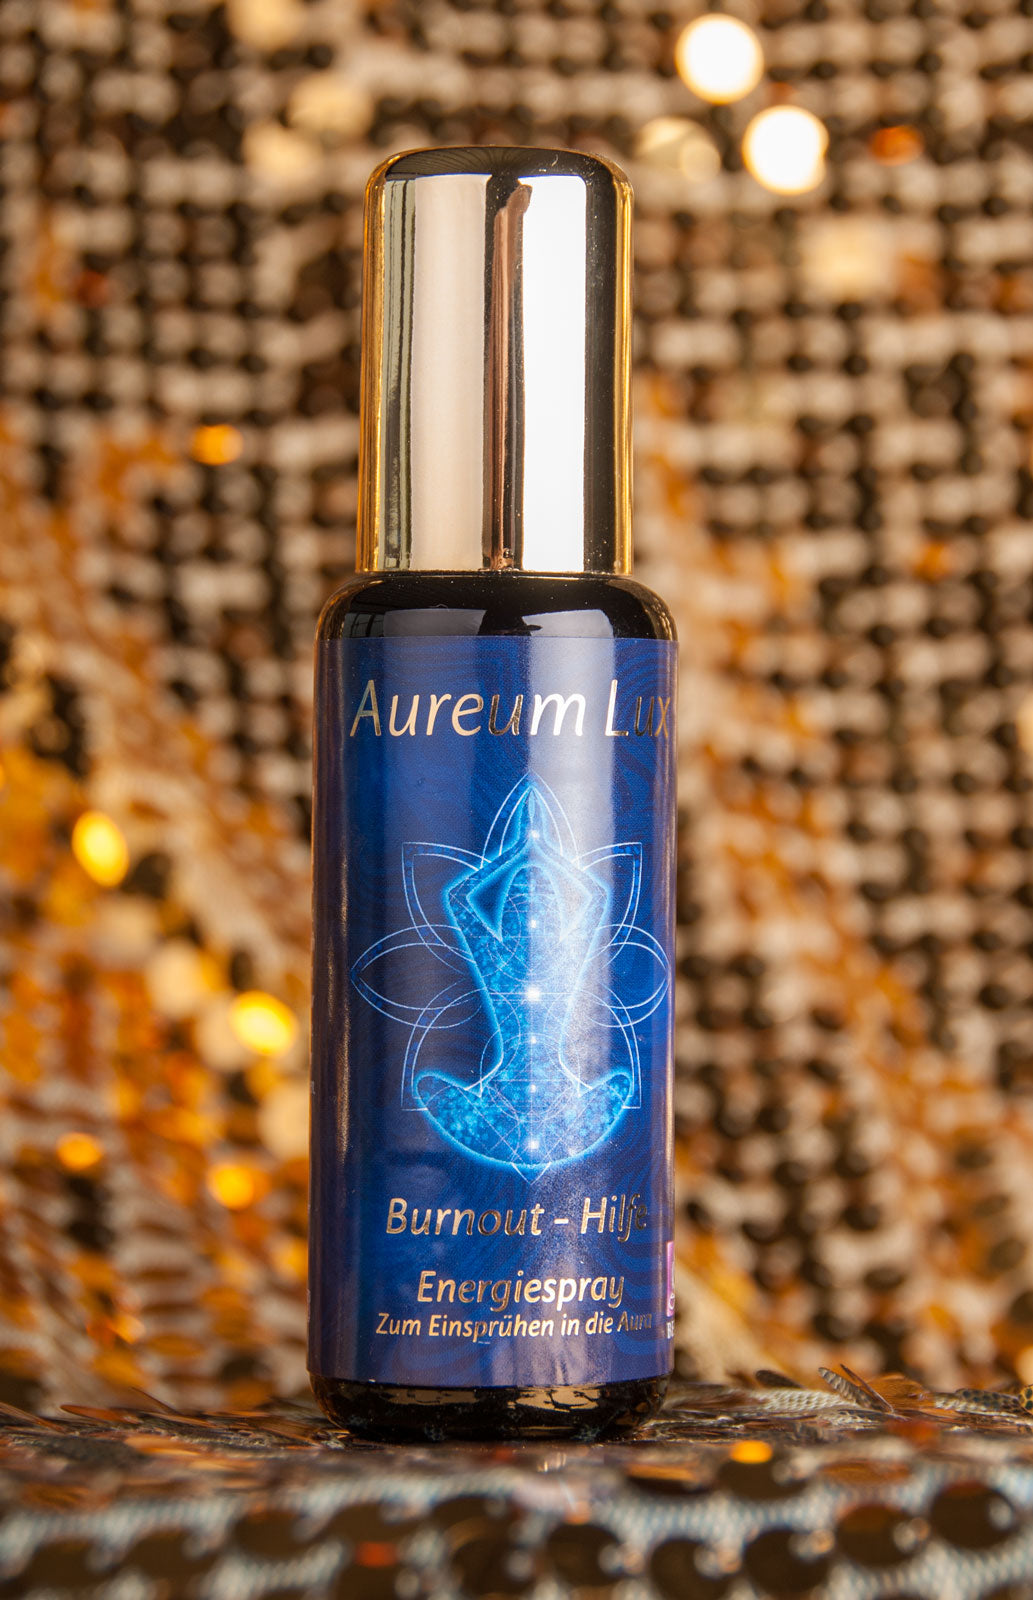 Holy Scents - Aureum Lux - Burnout-Hilfe - Energiespray 50 ml